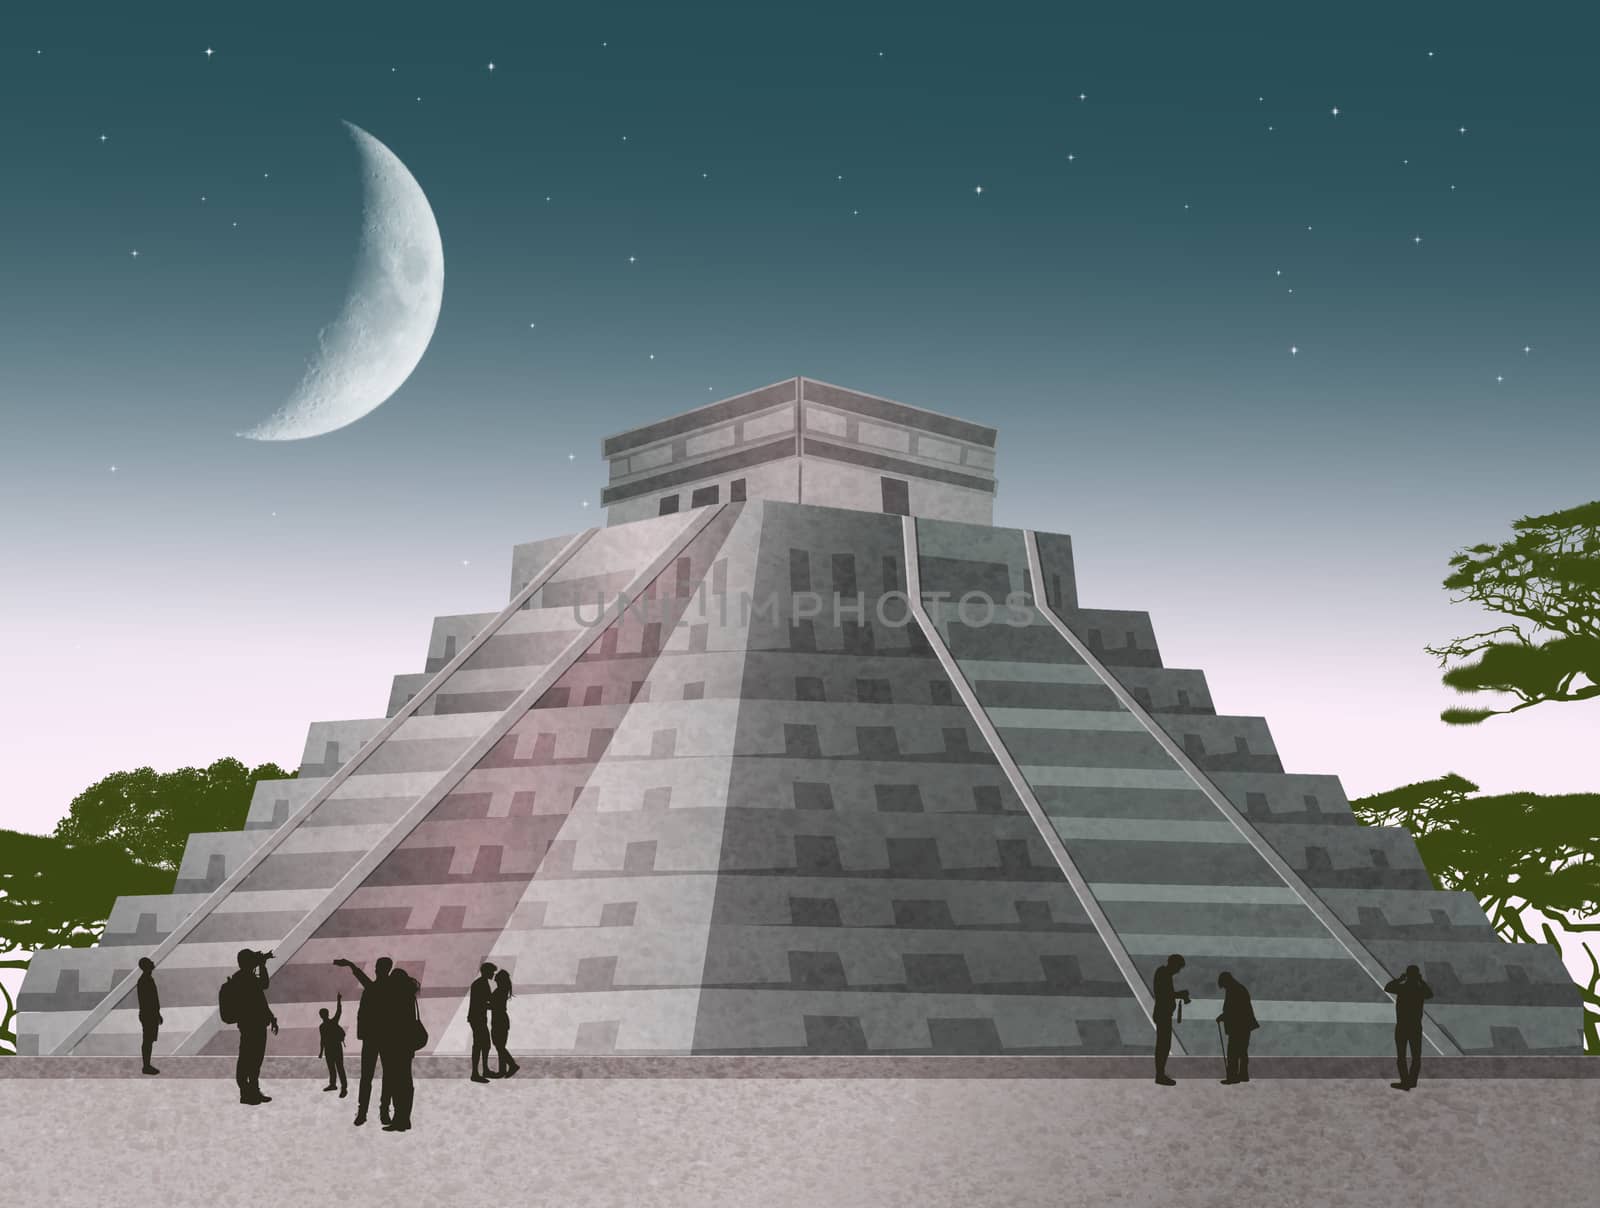 illustration of the Mayan pyramid